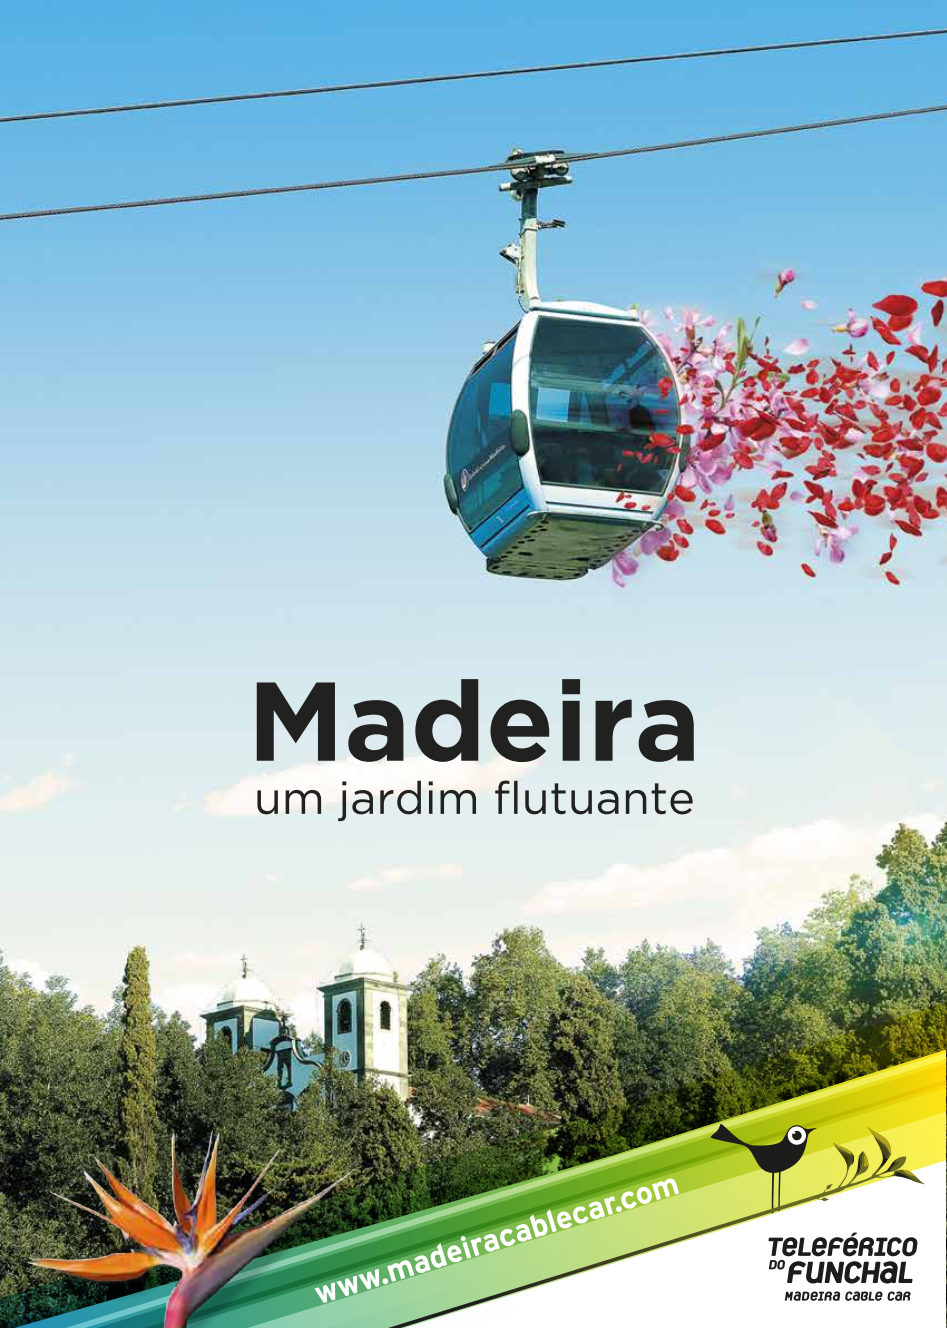 Madeira-cable-car-PUB.jpg